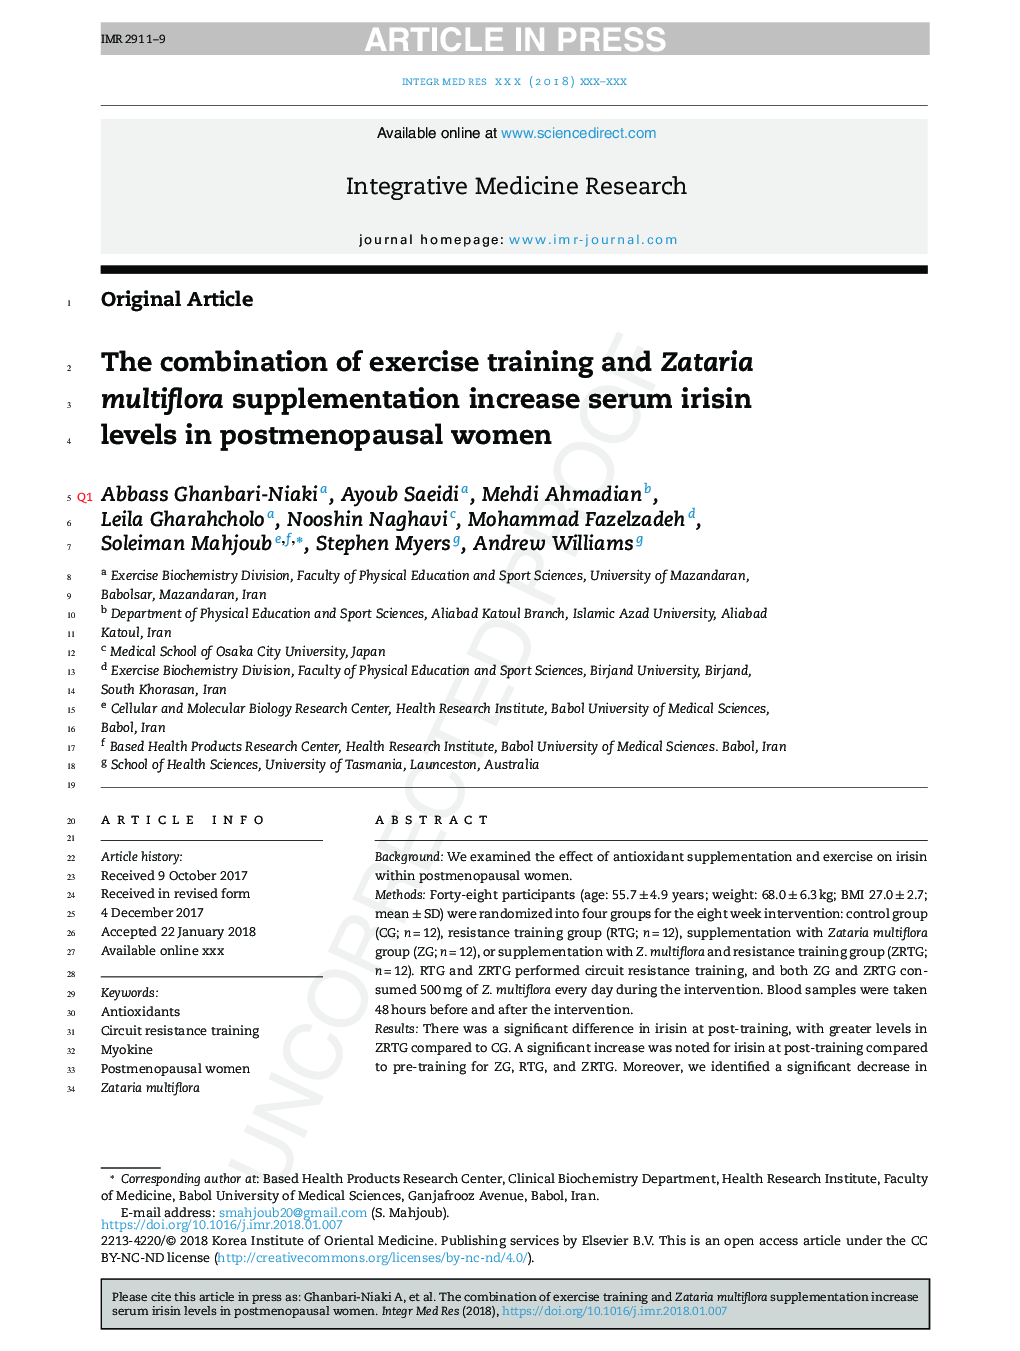 The combination of exercise training and Zataria multiflora supplementation increase serum irisin levels in postmenopausal women